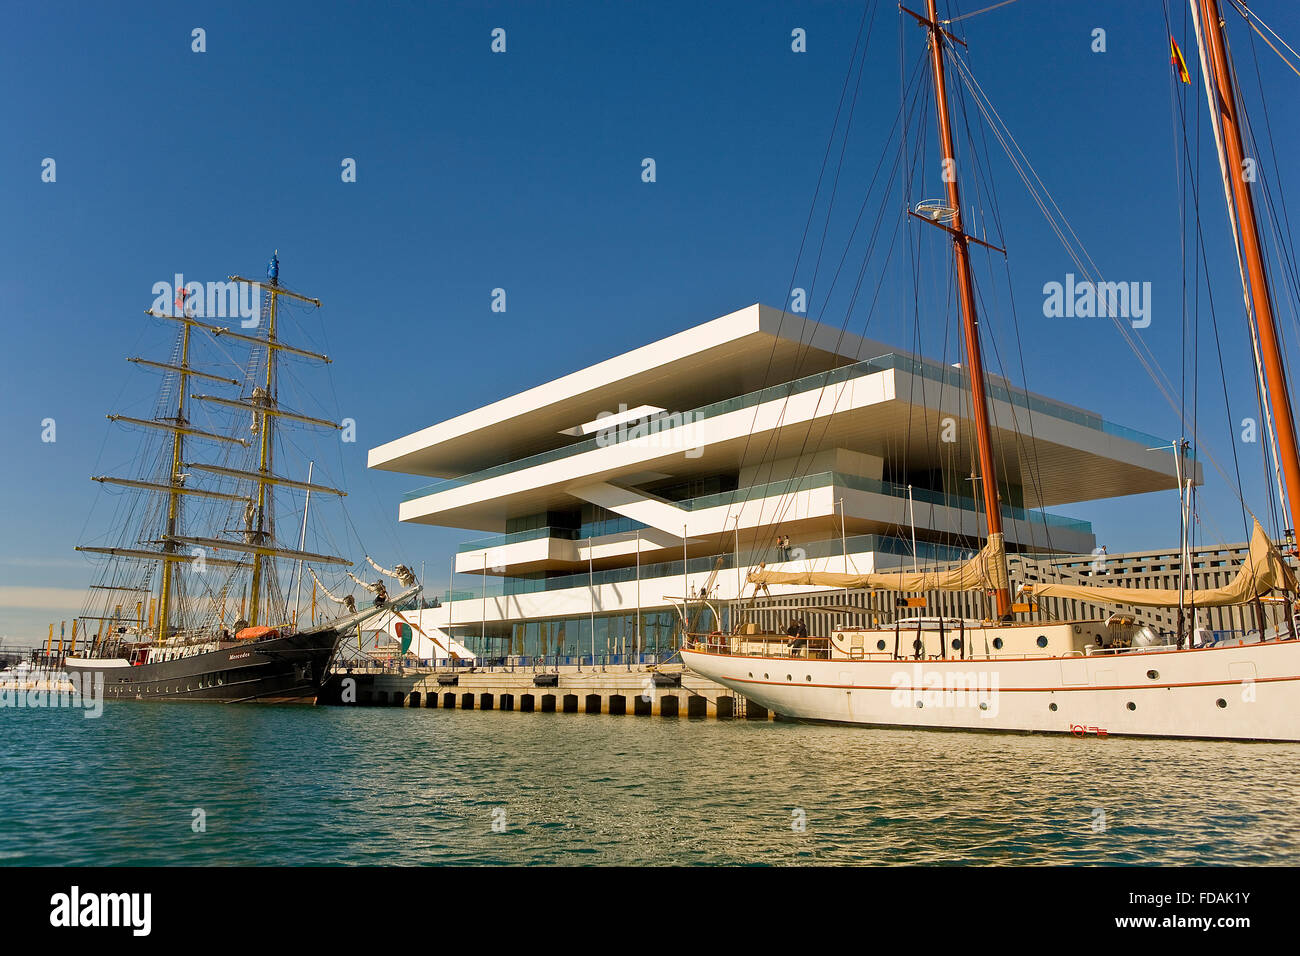 Veles e Vents, building by David Chipperfield, Port Americas Cup, Valencia, Spain Stock Photo